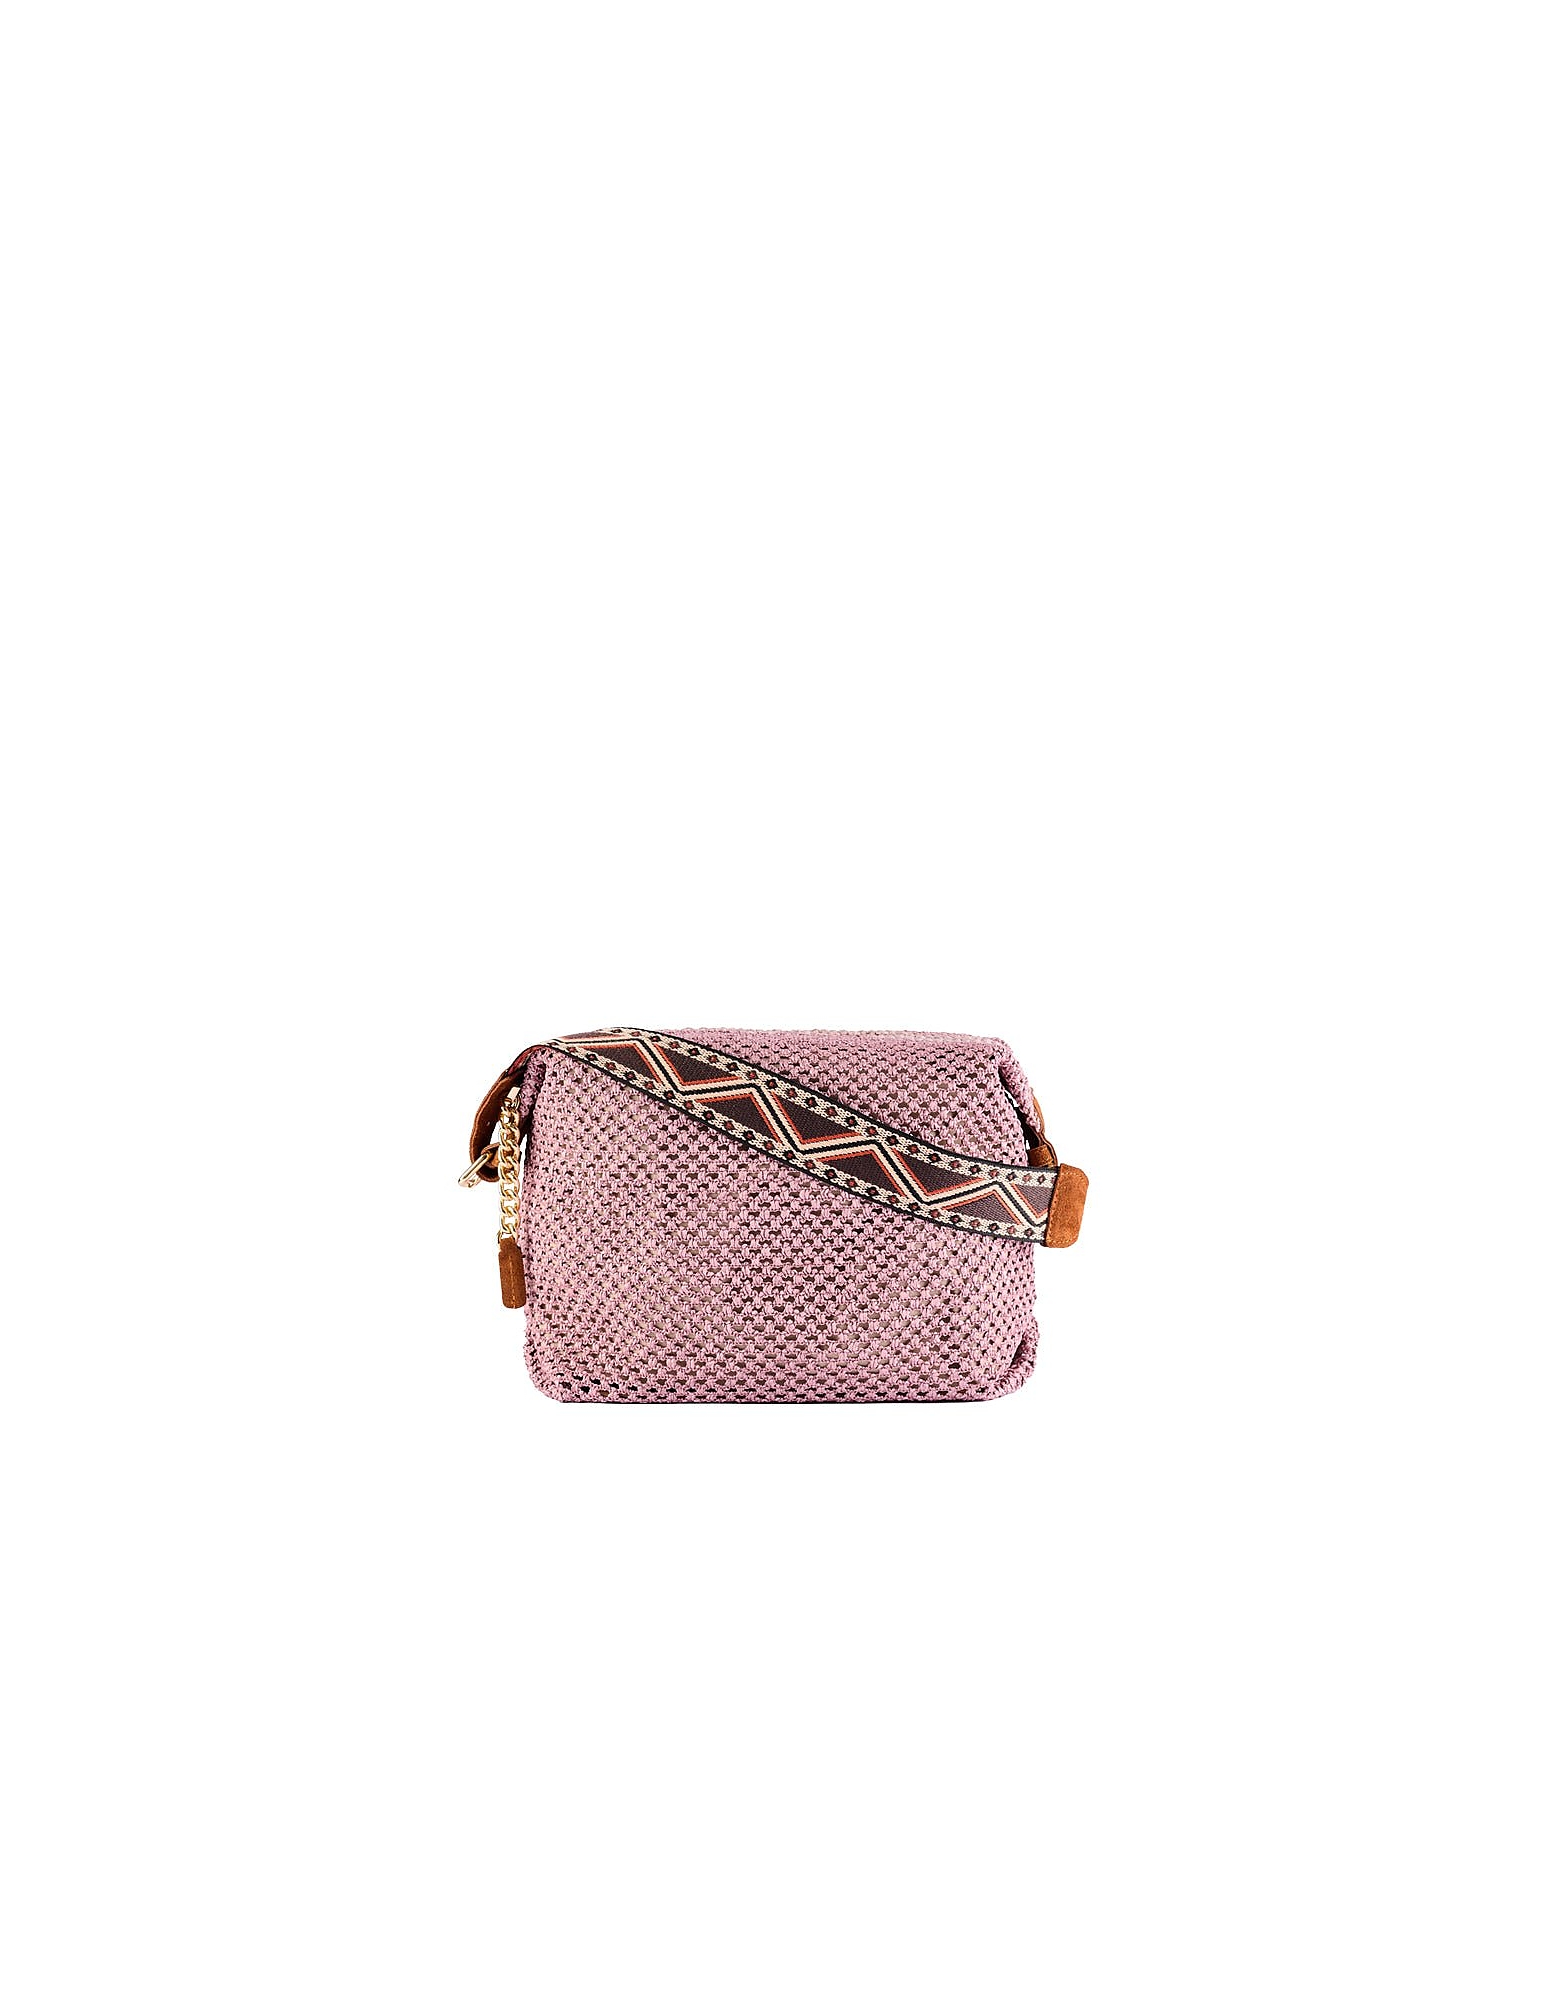 Viamailbag Designer Handbags Maya Drill - Shoulder Bag In Rose